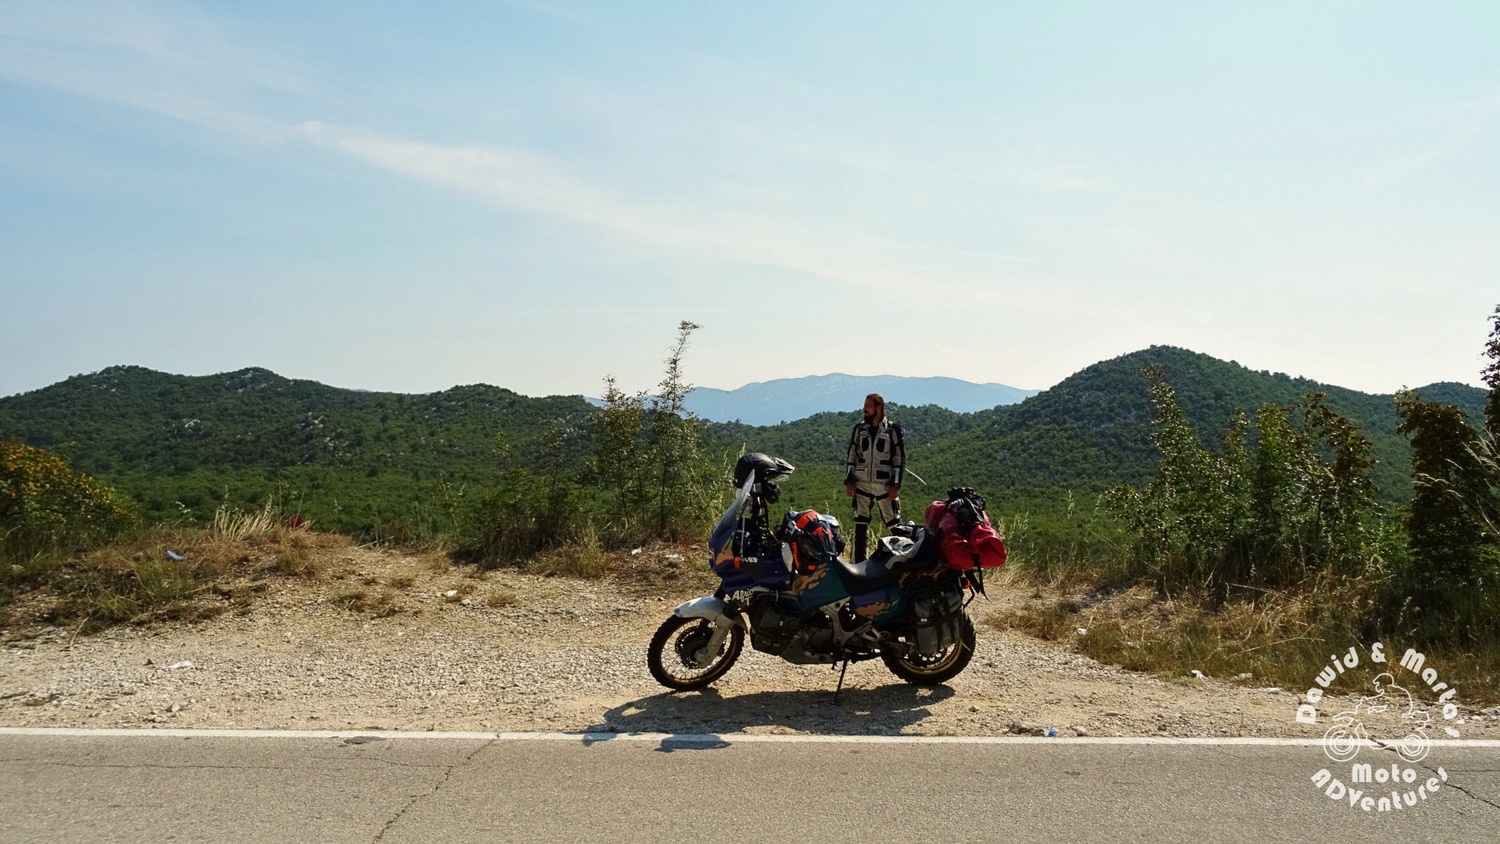 The viewpoint stop at the Cetina River canyon